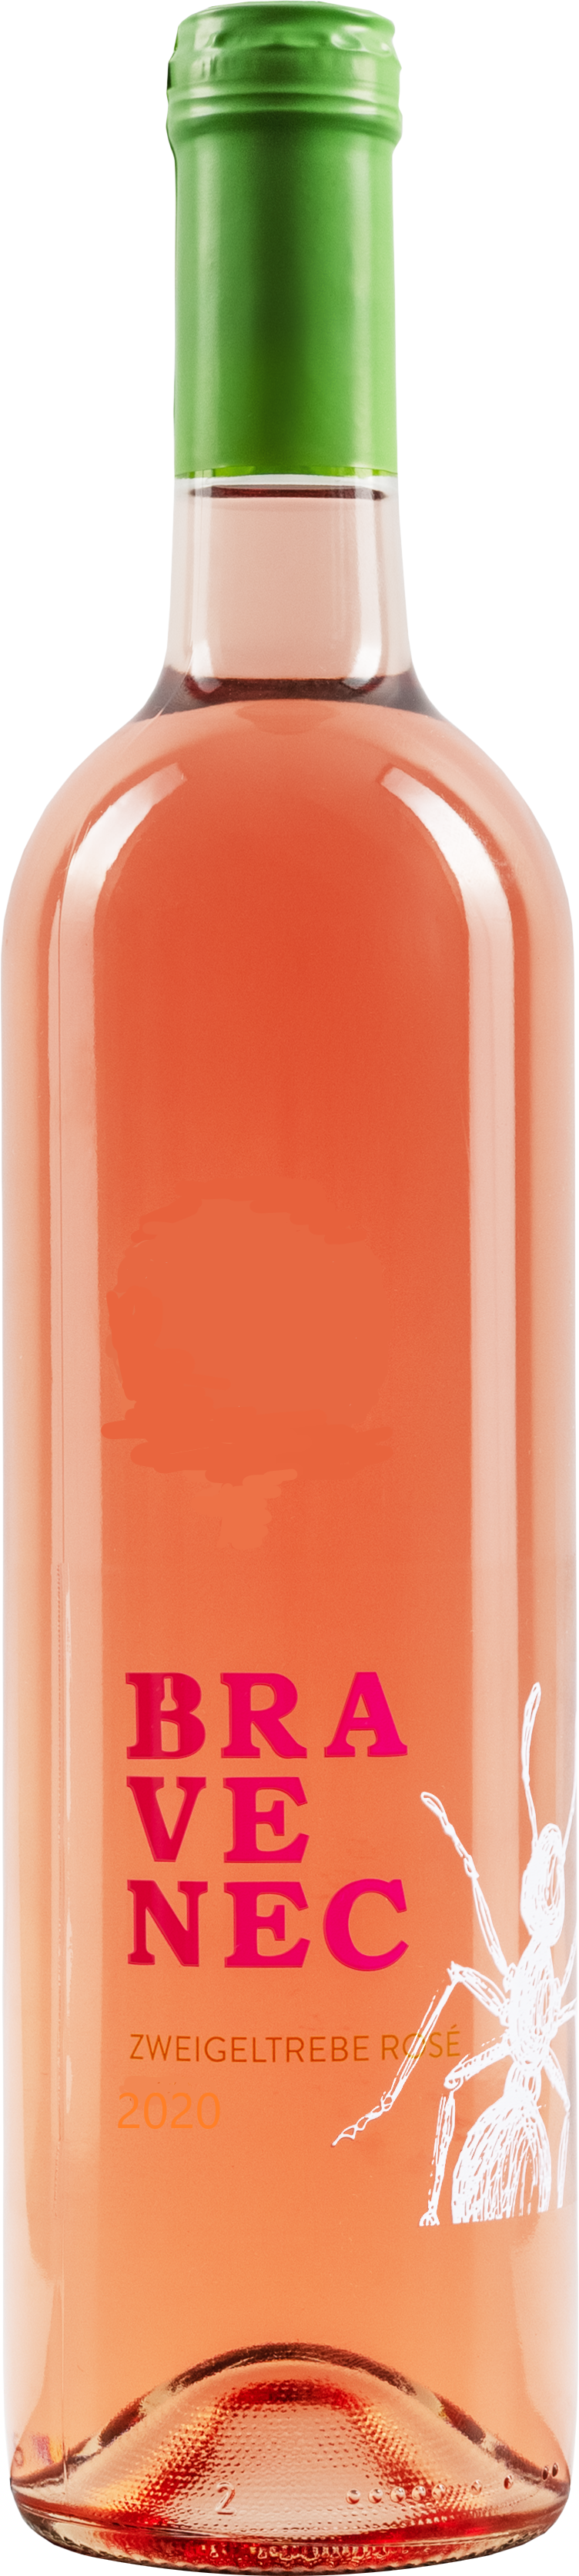 Zweigeltrebe rosé 2020 - KAB, polosuché 